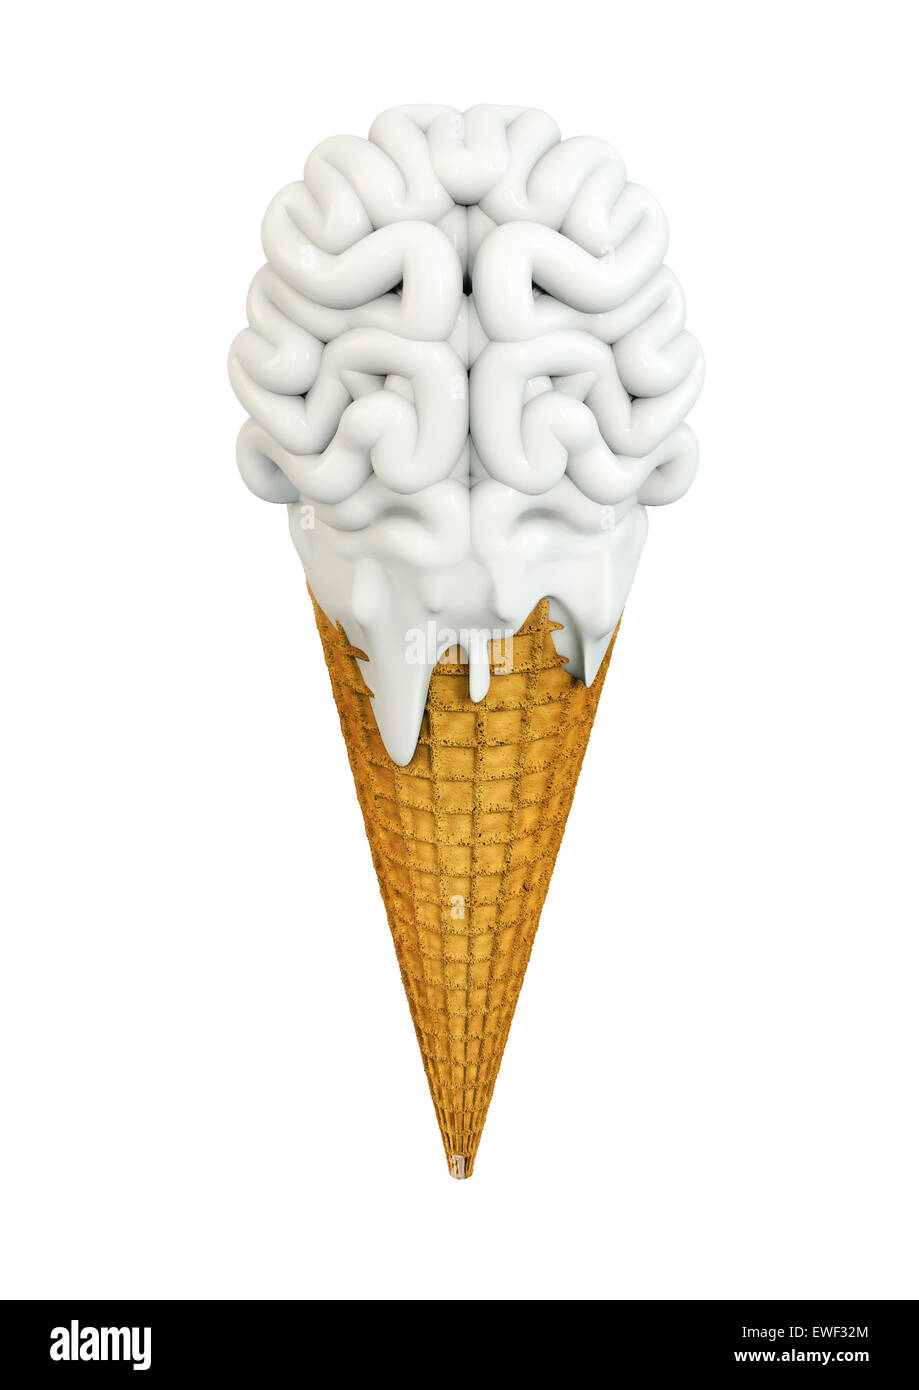 3D render of brain shaped ice cream cone Stock Photo